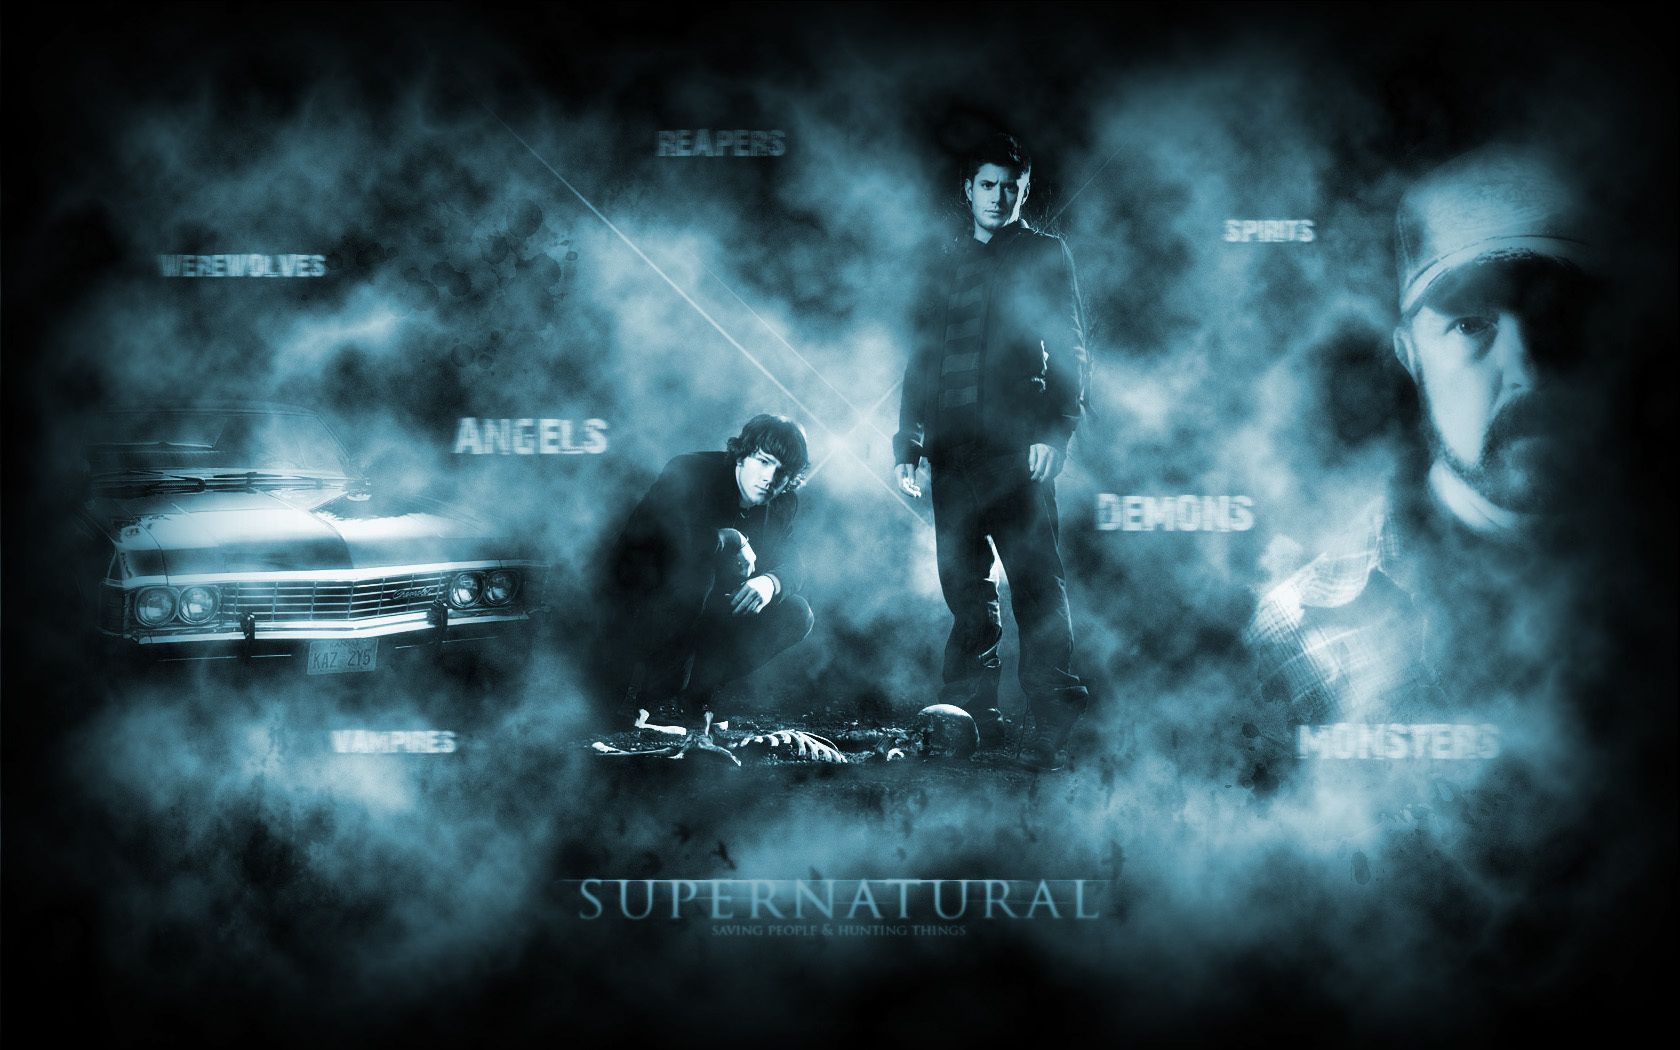 Supernatural Season 7 Wallpaper - Free Wallpaper Images